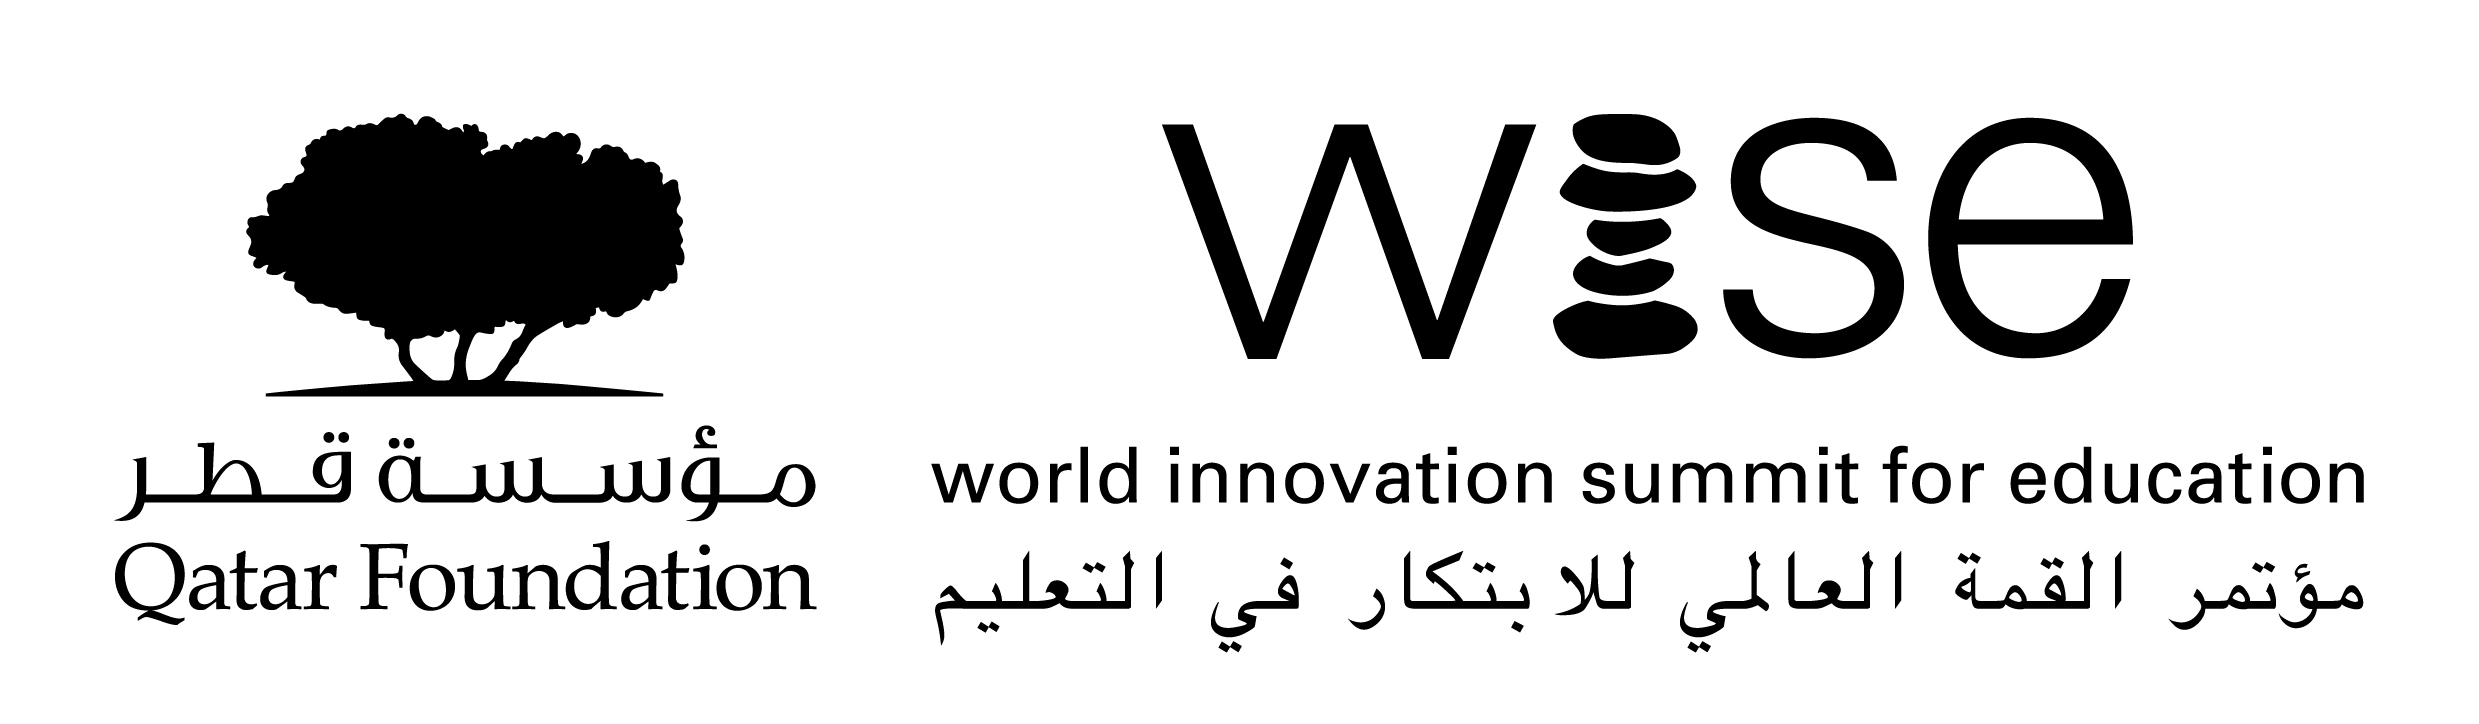 Logo WISE